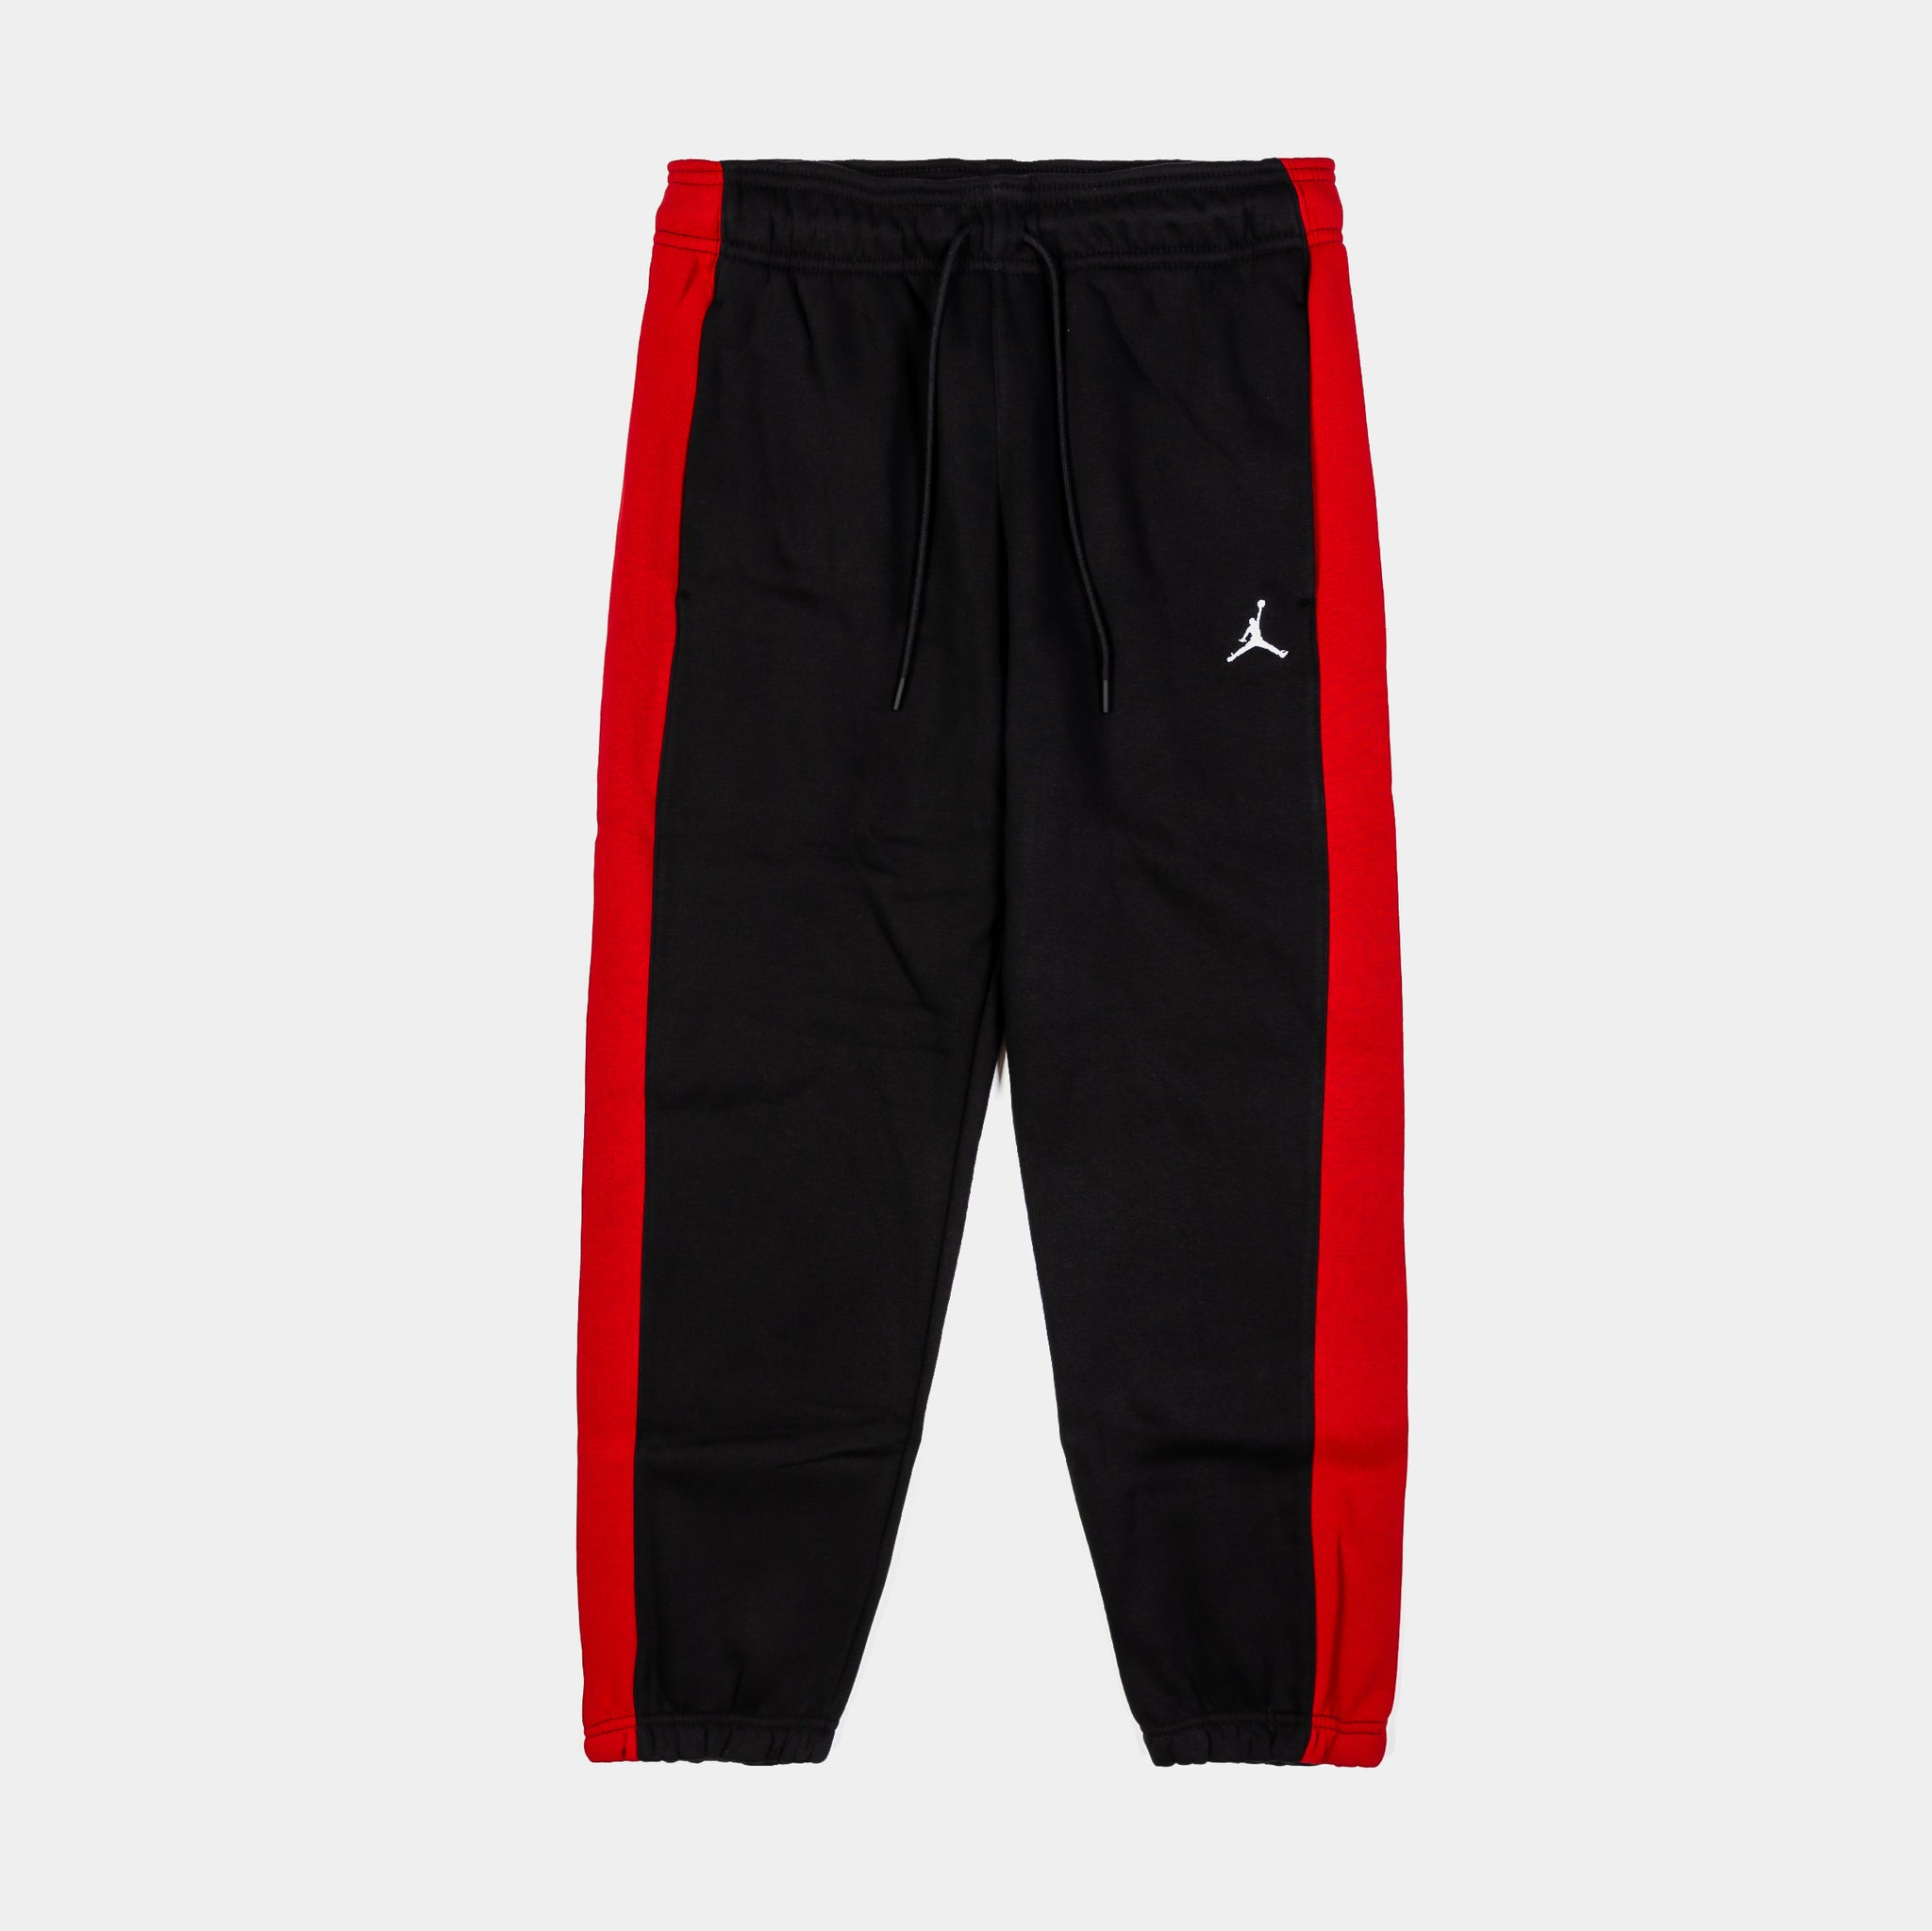 Nike Sweatpants Womens Small Black Red Trim Drawstring Cotton